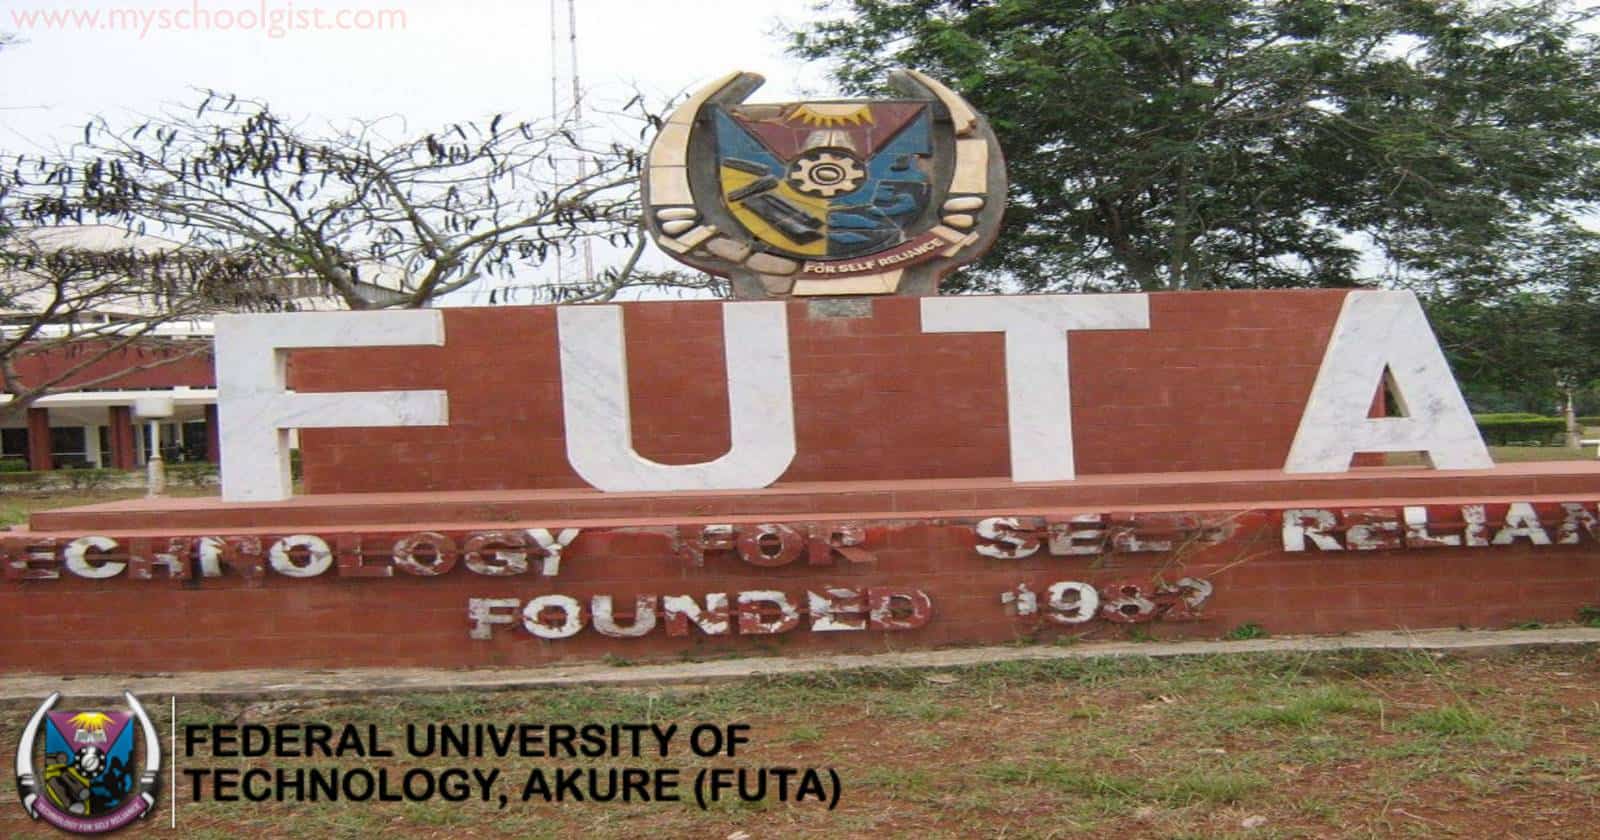 Federal University of Technology, Akure (FUTA) School Fees Schedule